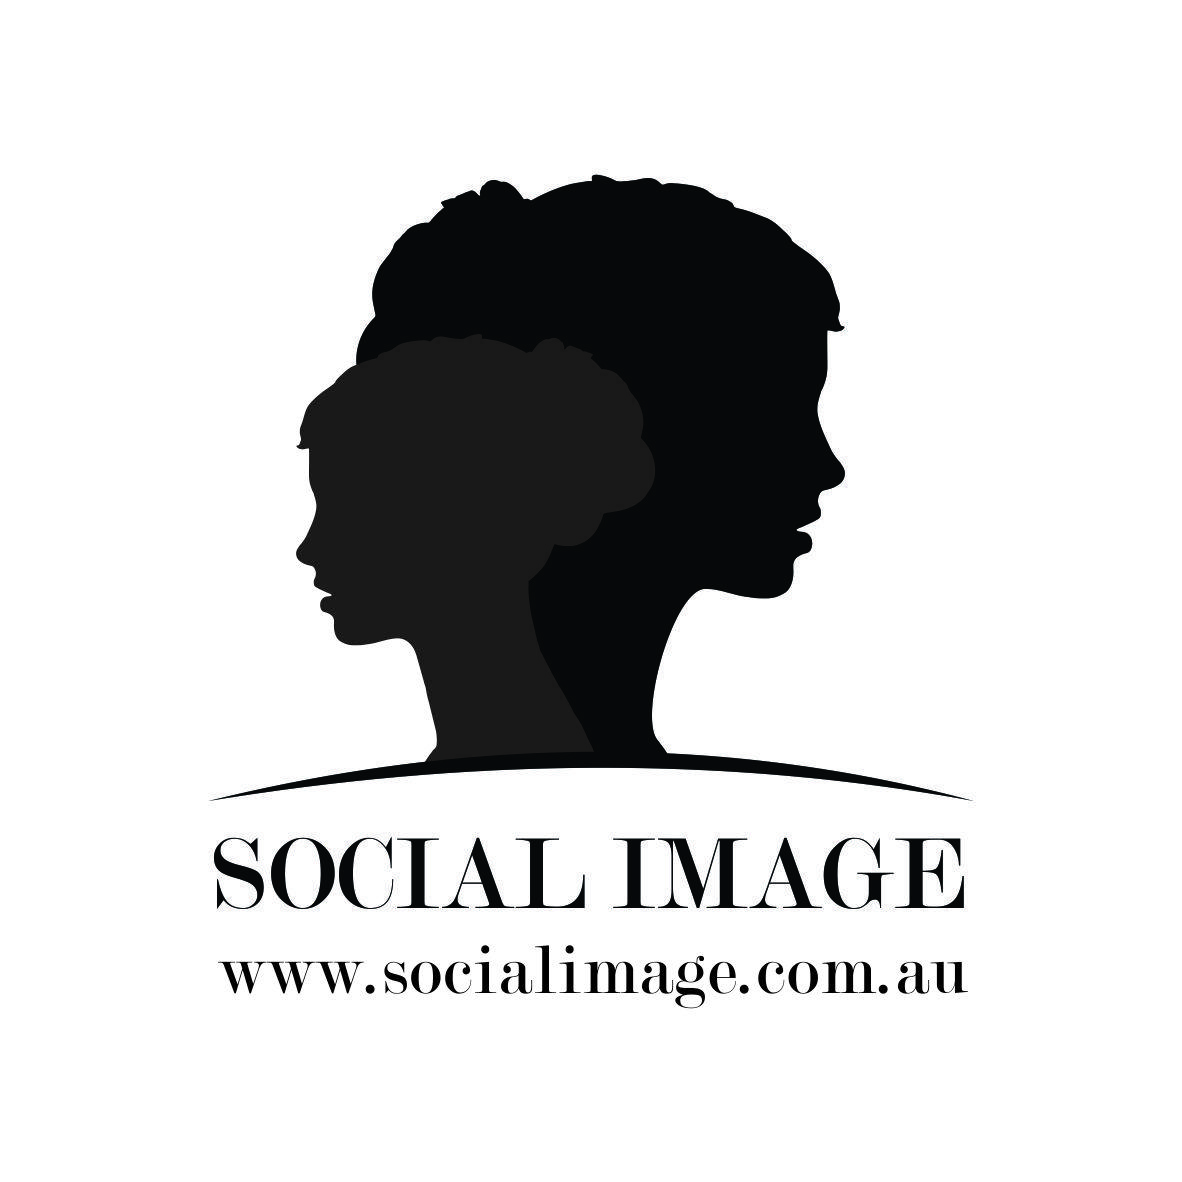 Dang Logo - Dating Logo Design for Social Image by dang. Design